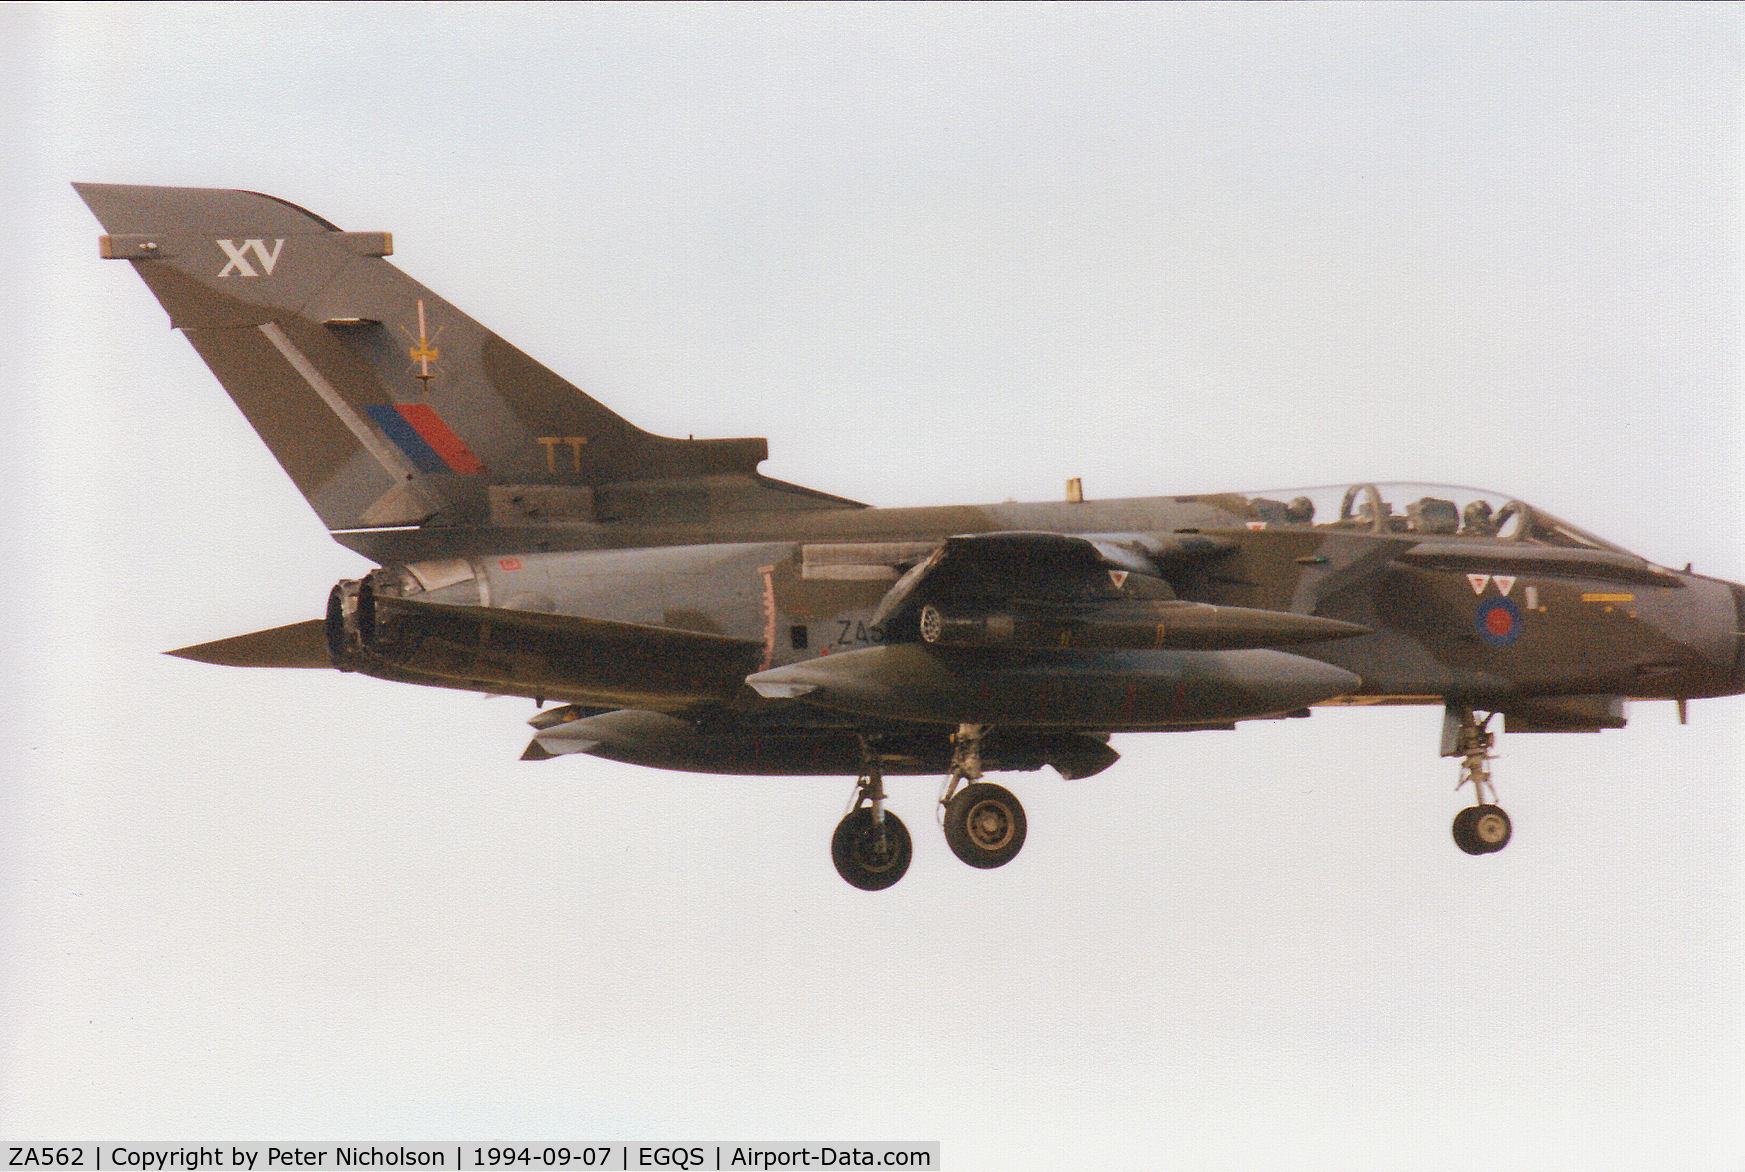 ZA562, 1981 Panavia Tornado GR.1(T) C/N 085/BT021/3046, Tornado GR.1(T), callsign Mitre 1, of 15[Reserve] Squadron landing at RAF Lossiemouth in September 1994.